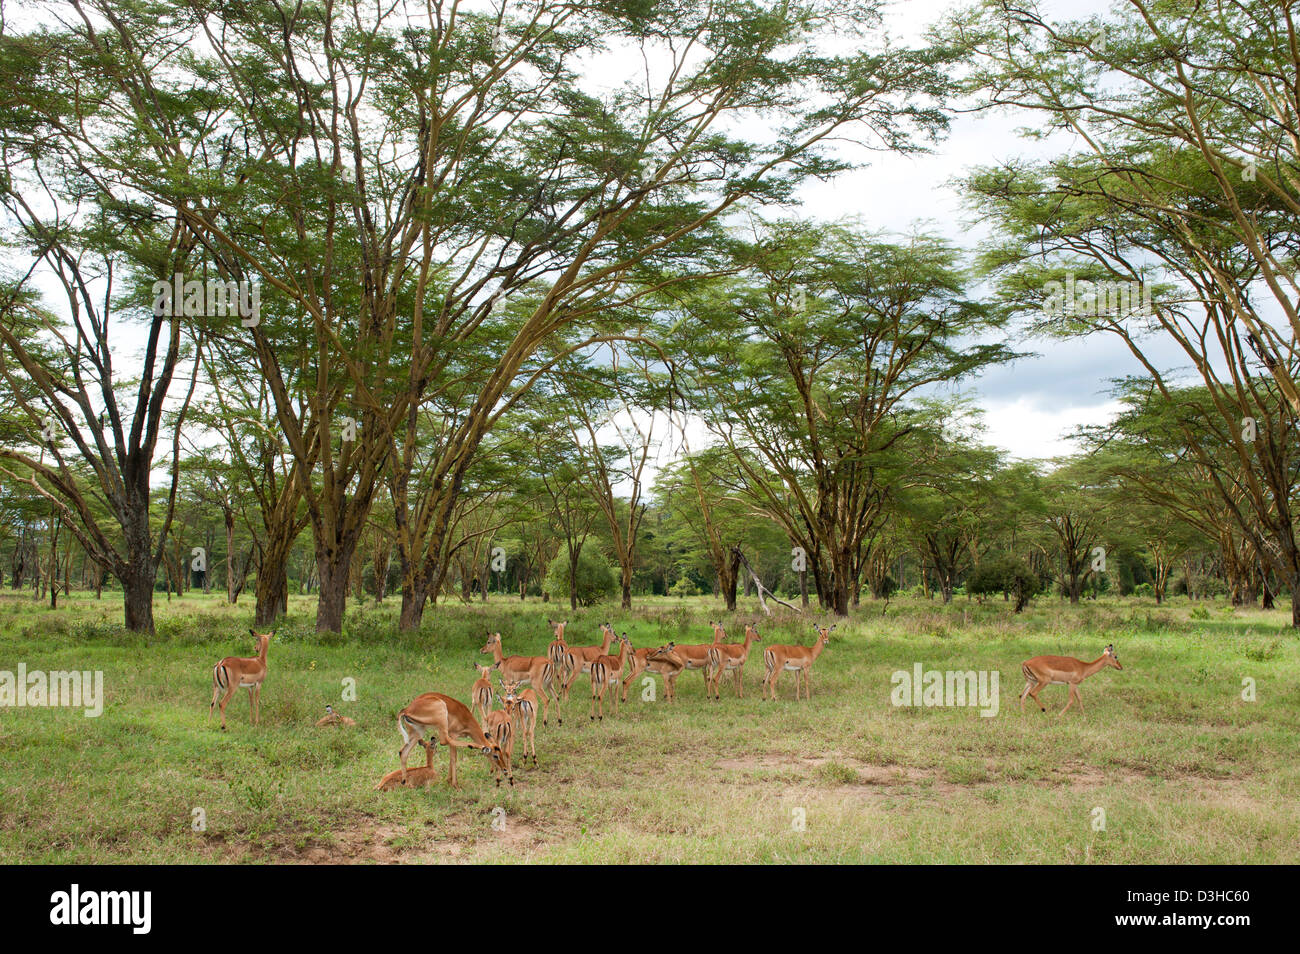 Impala (Aepyceros melampus) entre les arbres de la fièvre jaune, Parc national du lac Nakuru, Kenya Banque D'Images